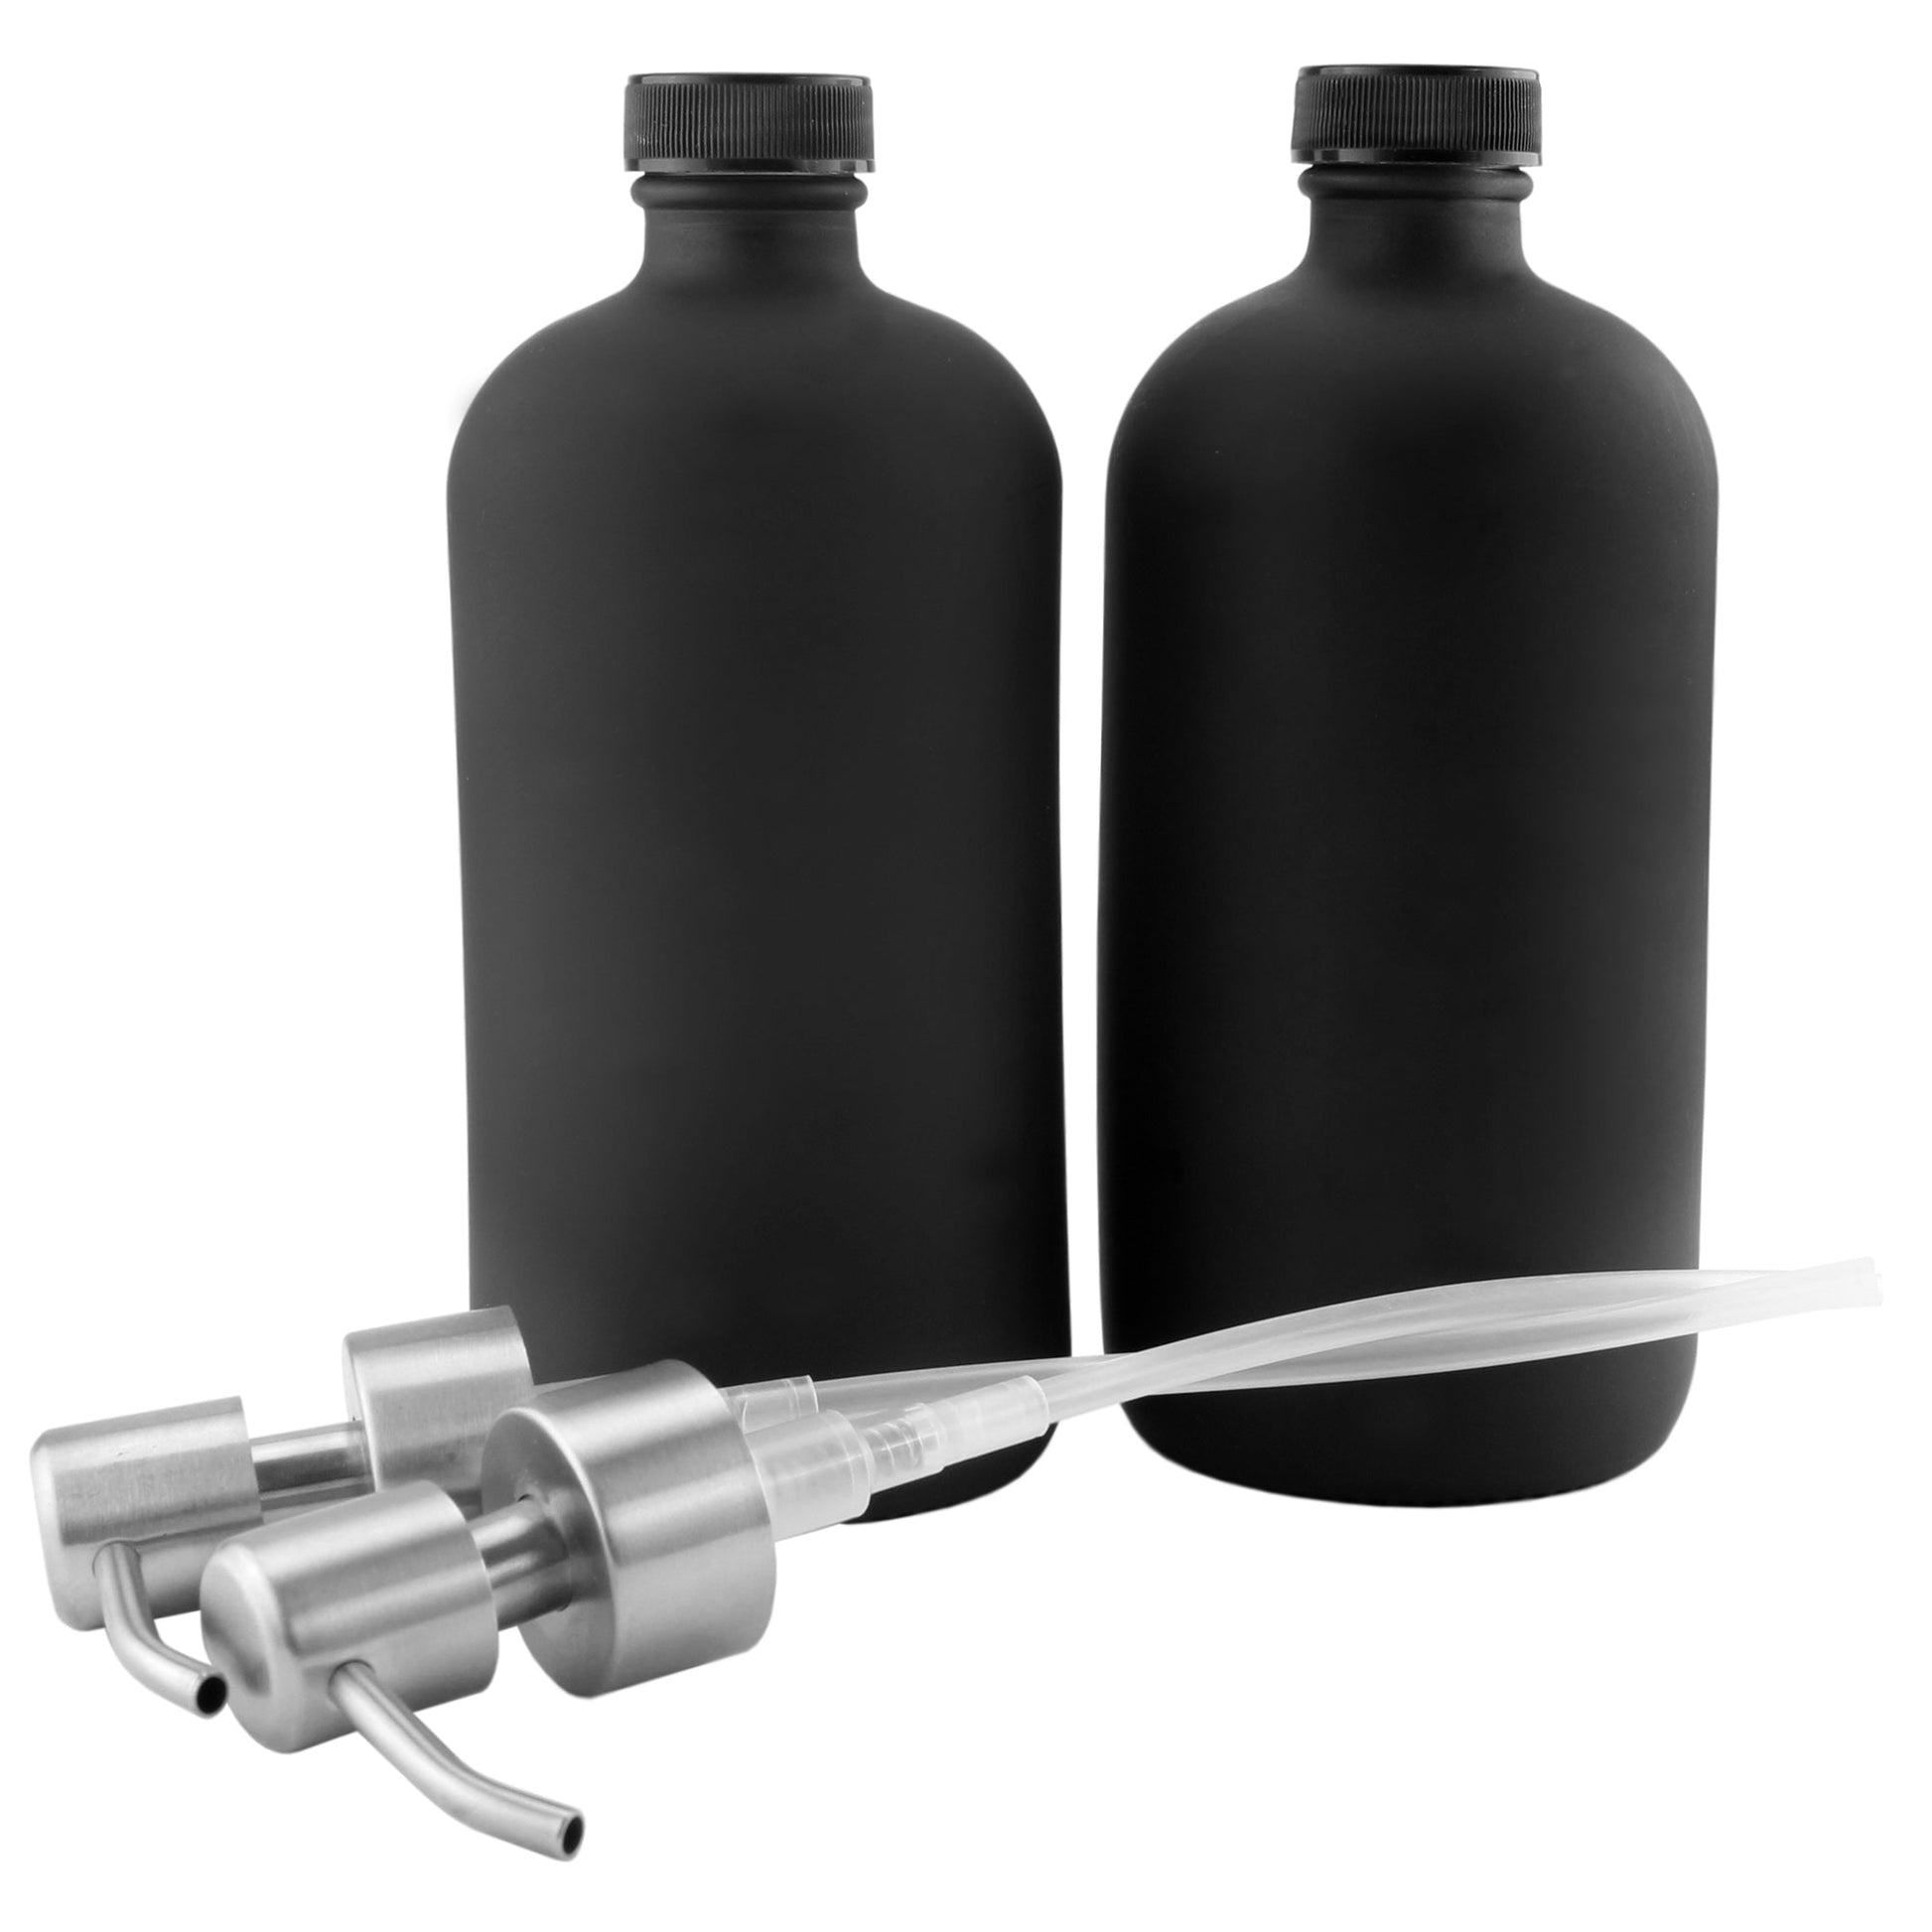 16oz Black Glass Bottles w/Stainless Steel Pumps (2-Pack) - sh1225cb0Blck